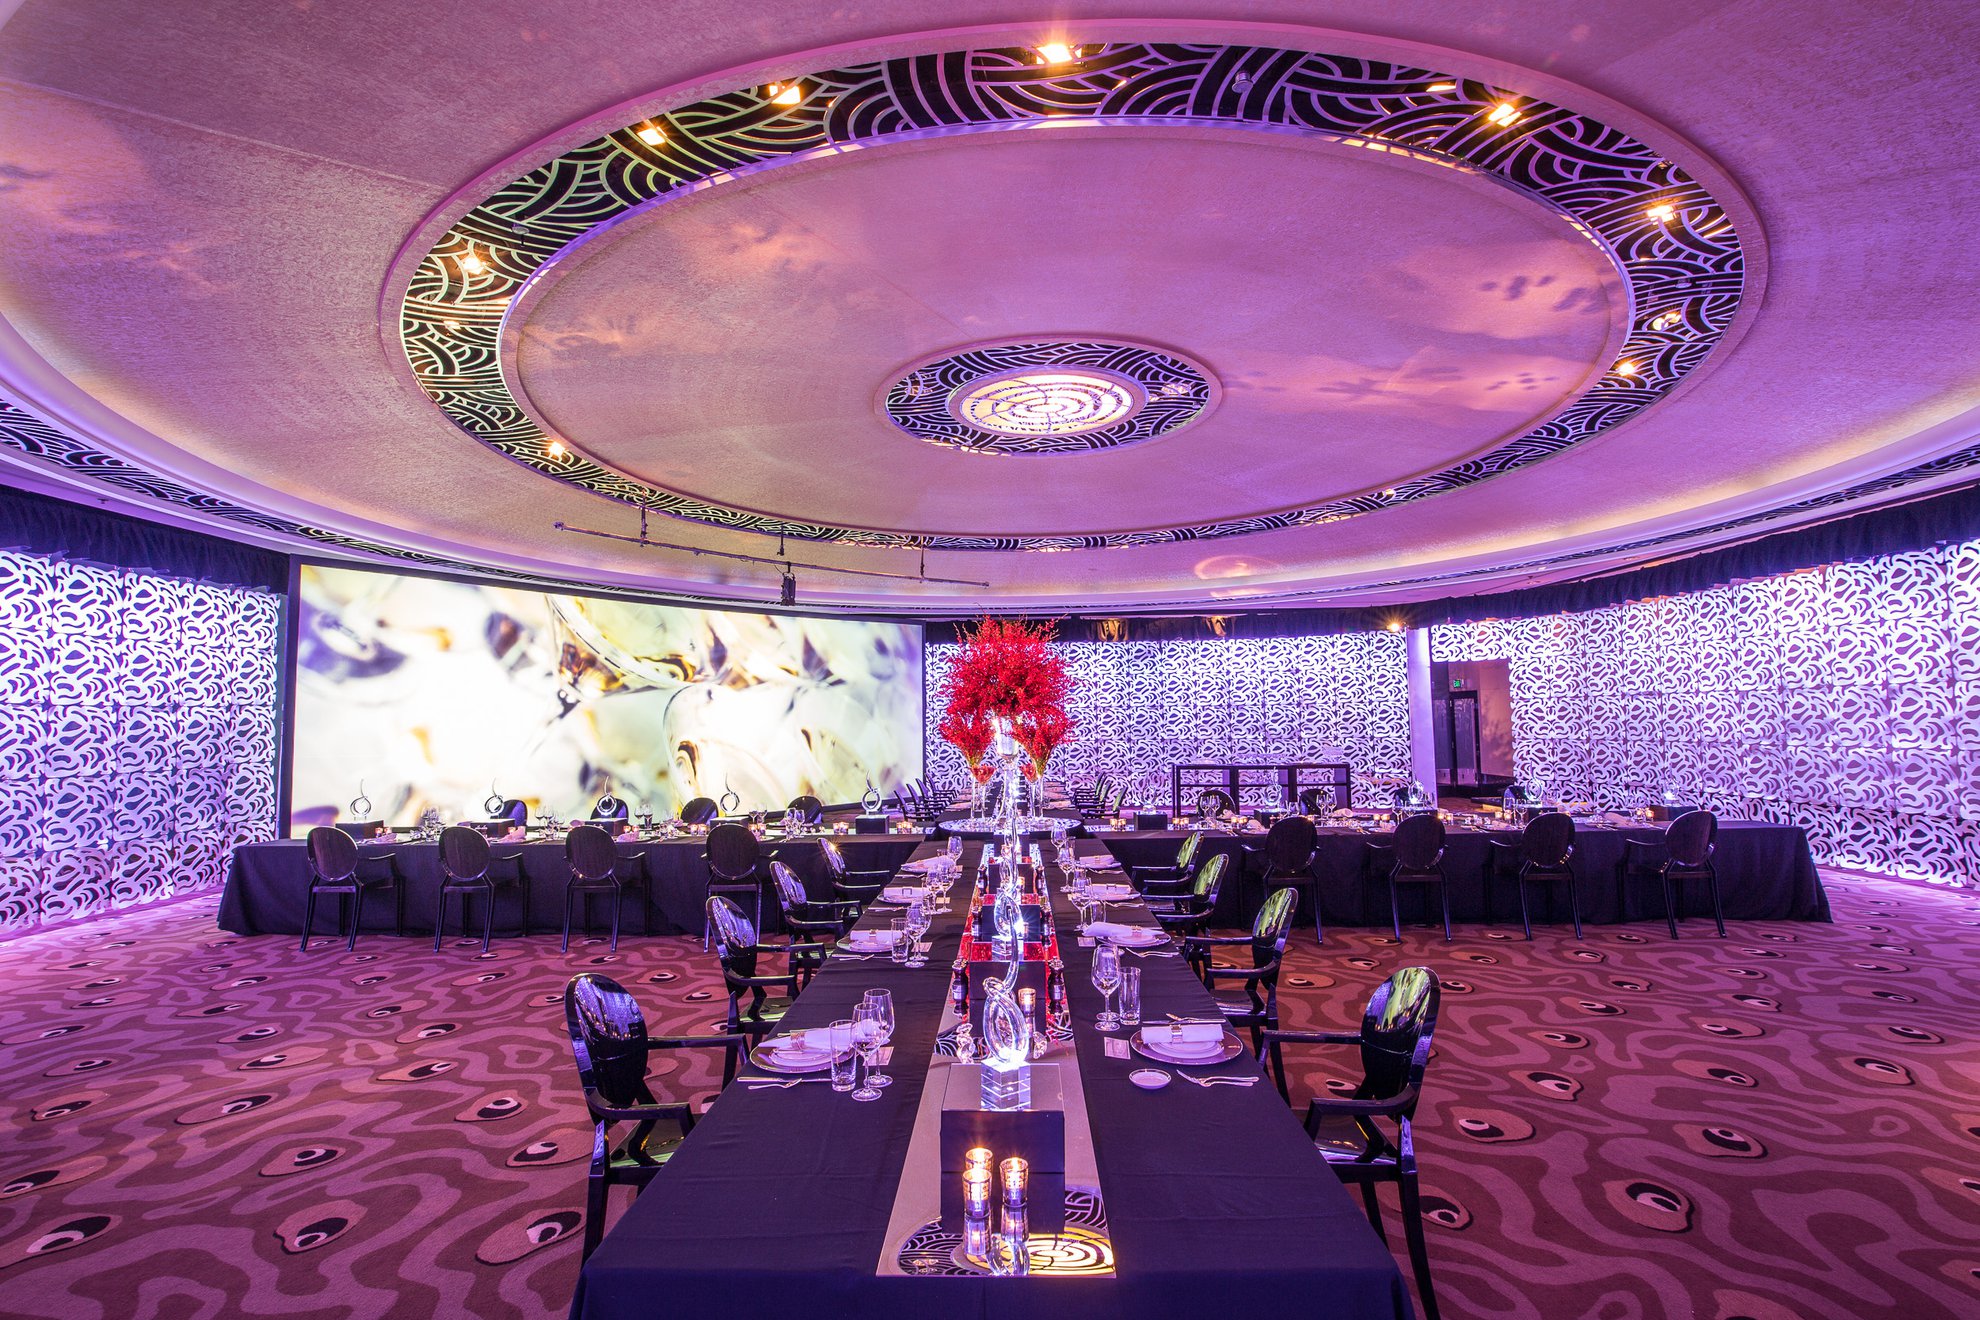 Mayfair Ballroom banquet style layout